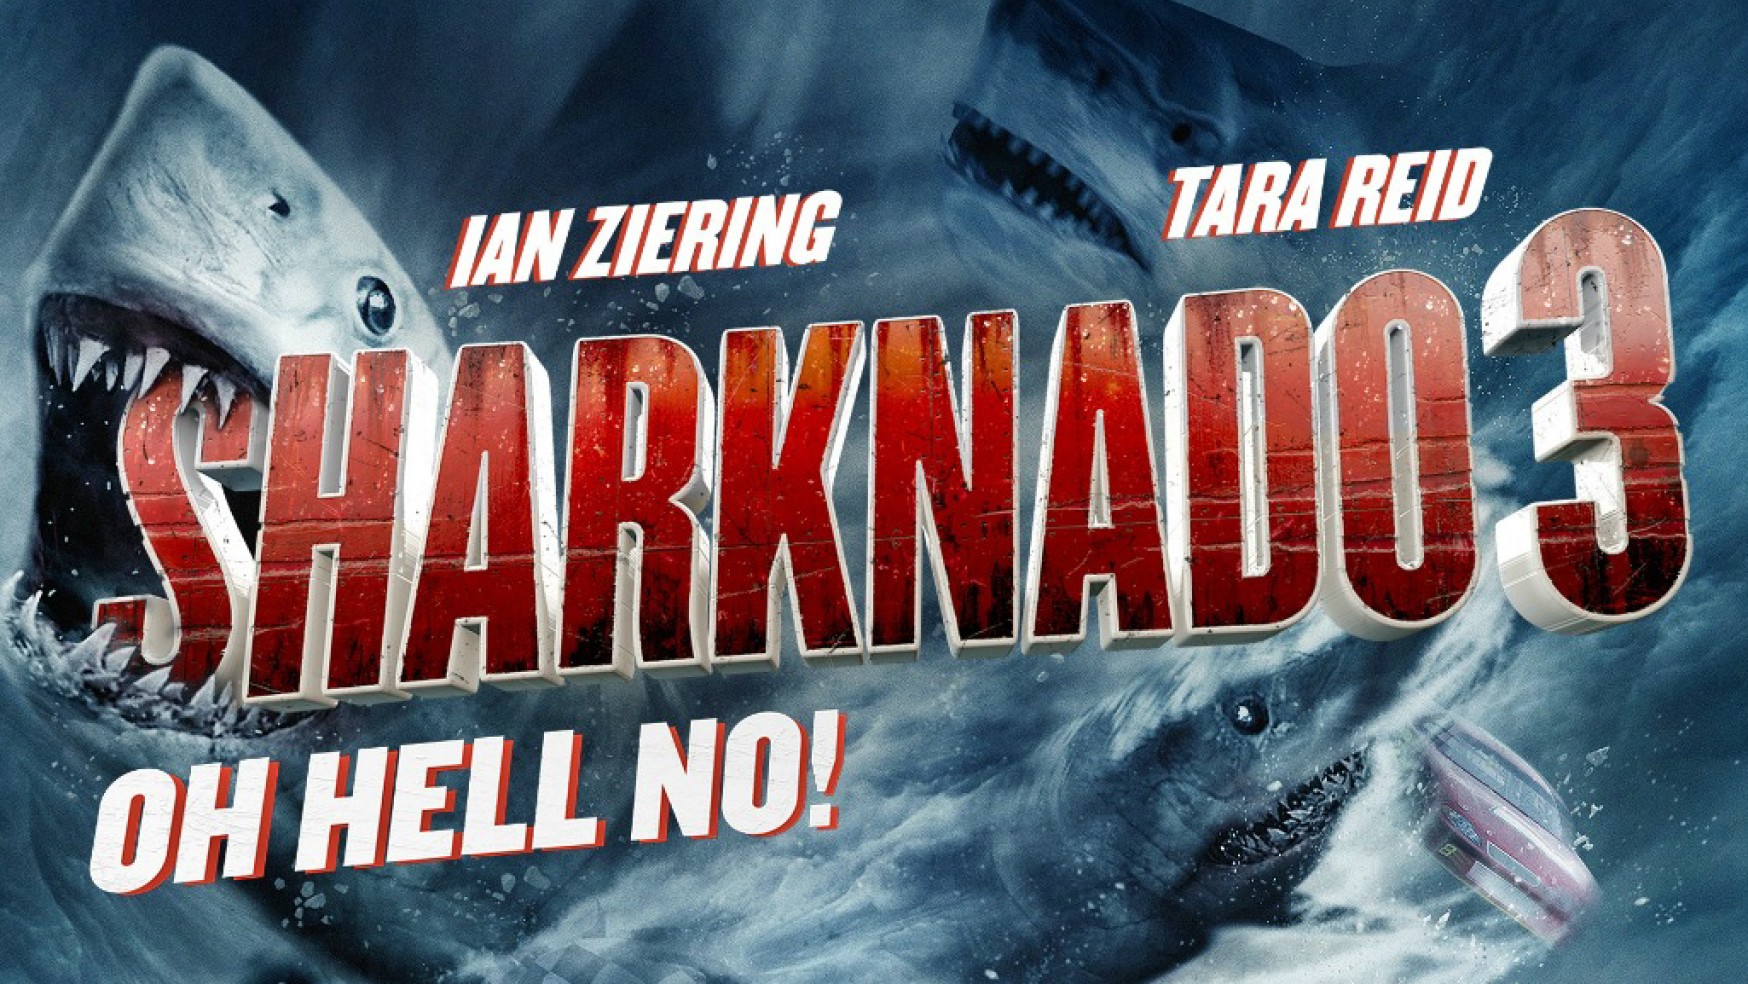 Sharknado 3 Oh Hell No! Torrent Download - HDRip Dublado (2015)